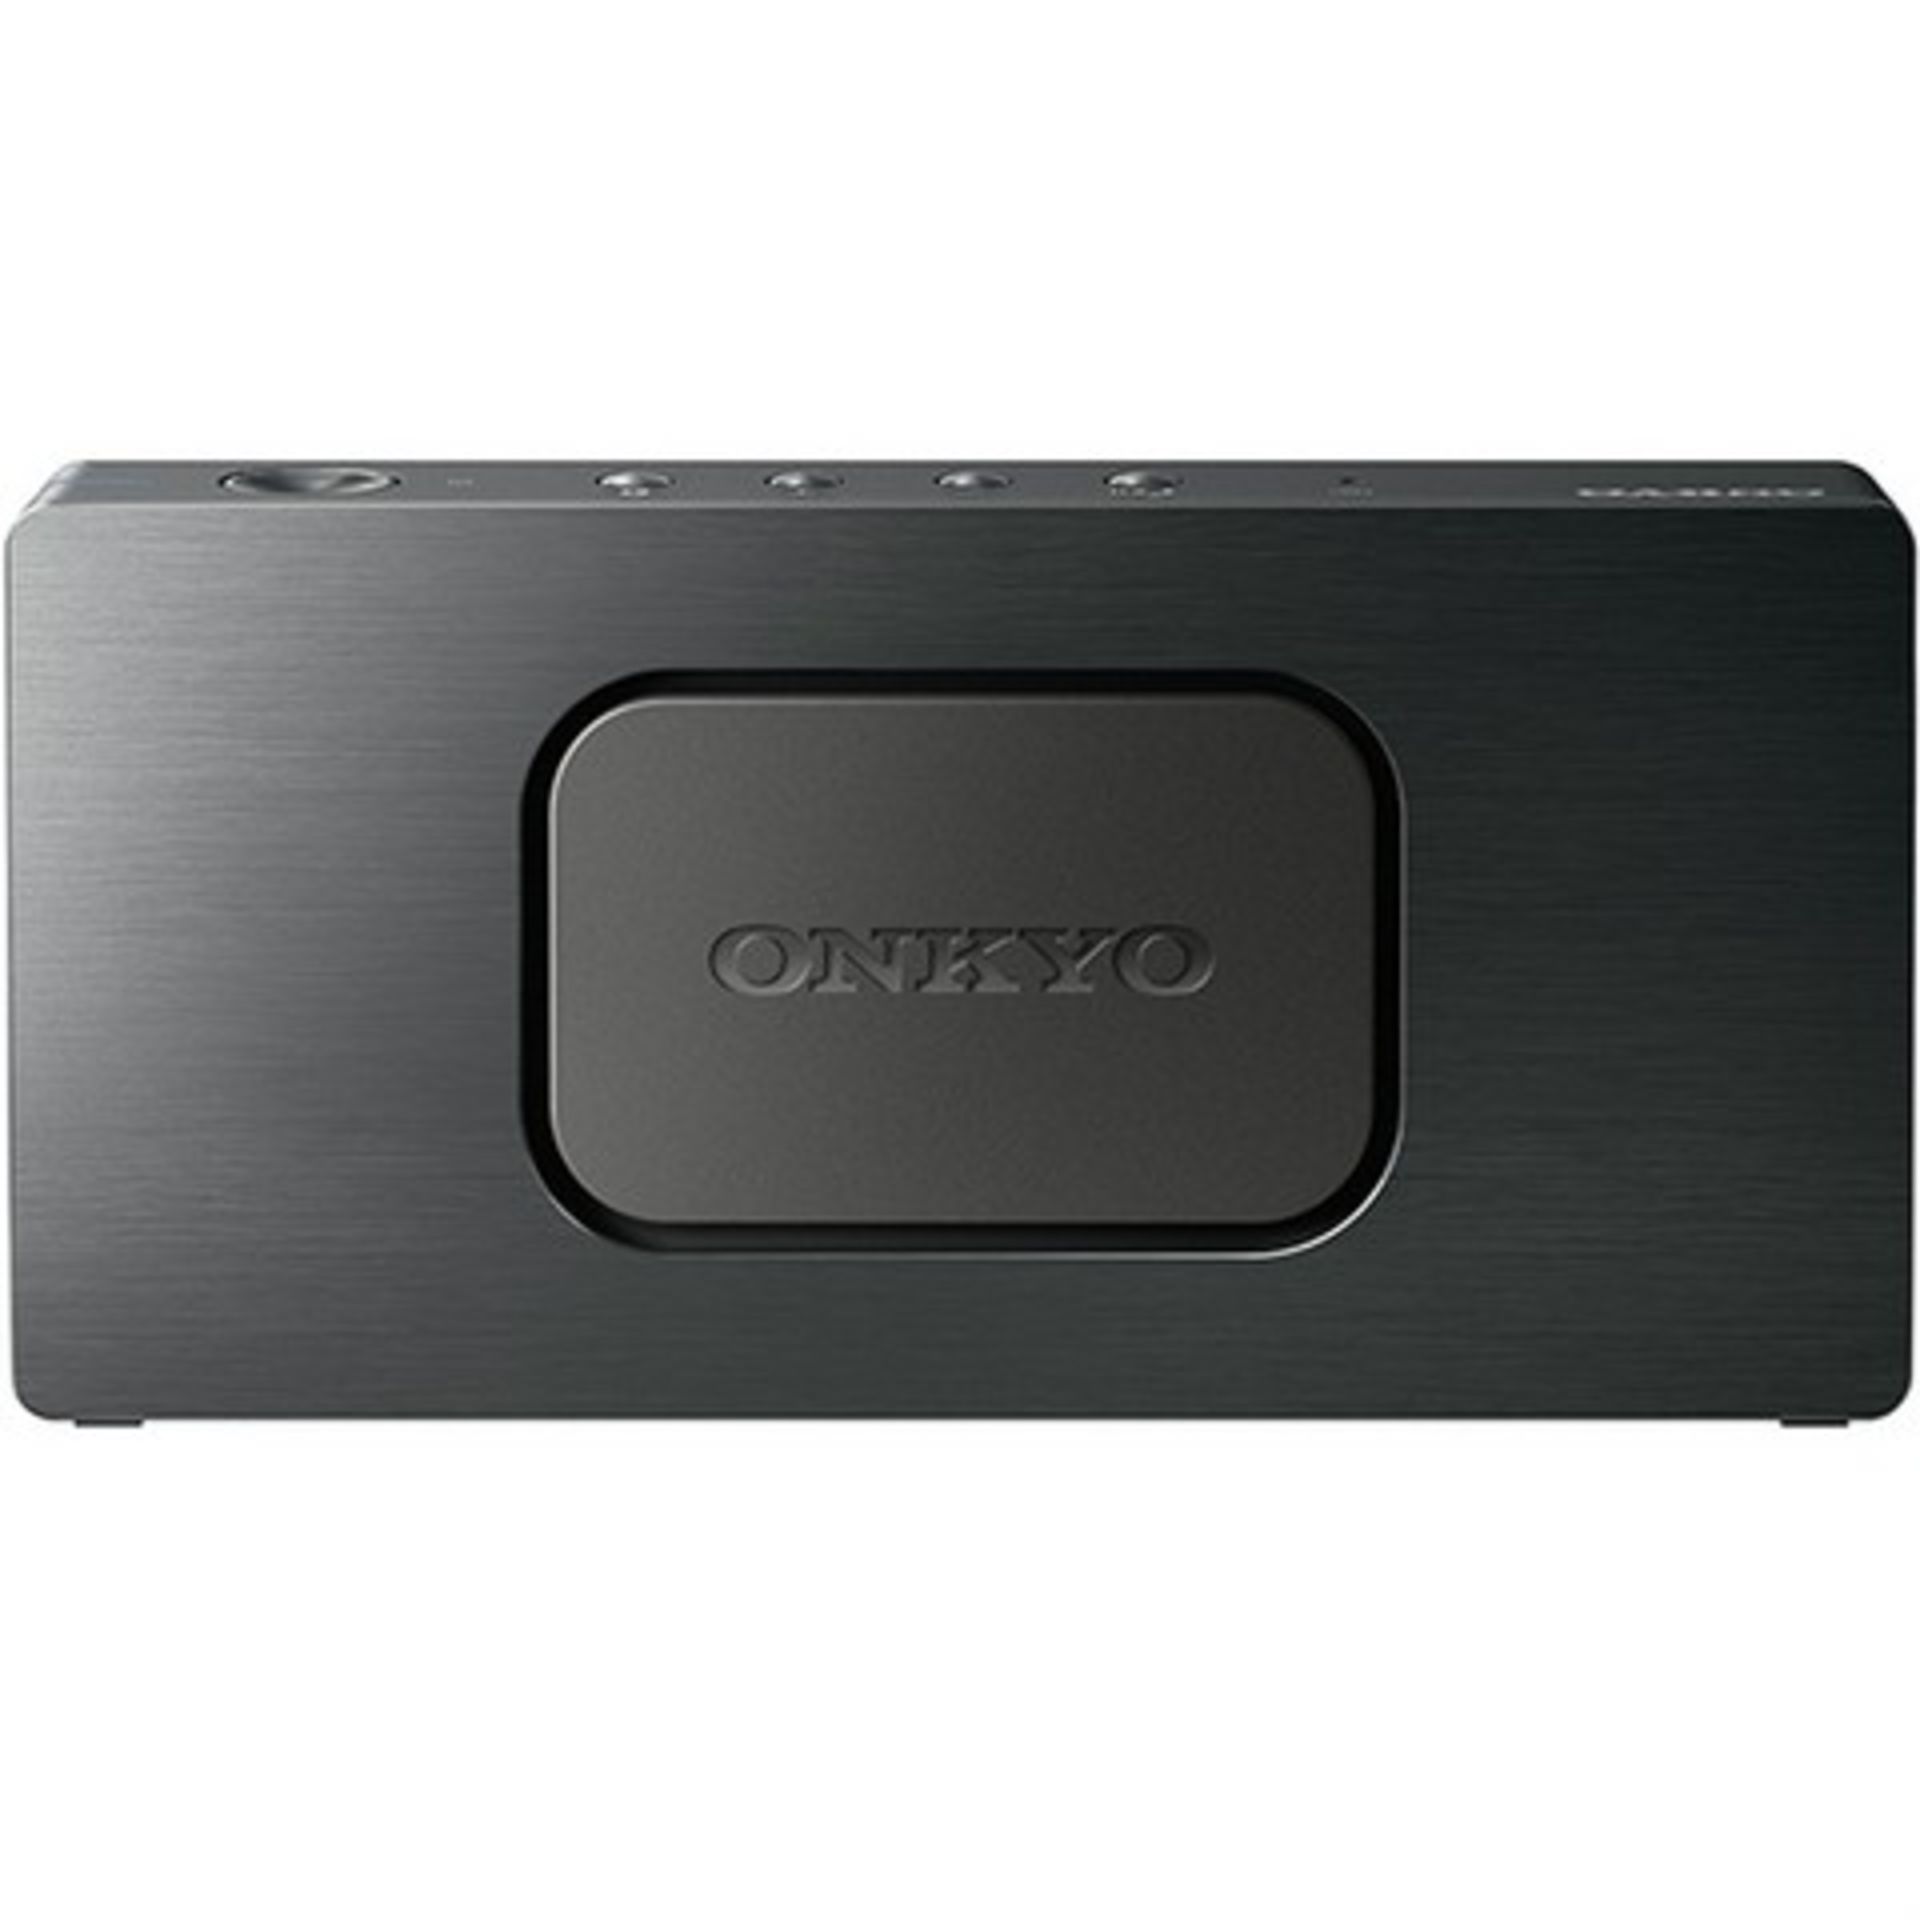 + VAT Brand New Onkyo T3 Lightweight Portable Bluetooth Speaker - Amazon Price £109.00 - 8 Hour - Image 2 of 4